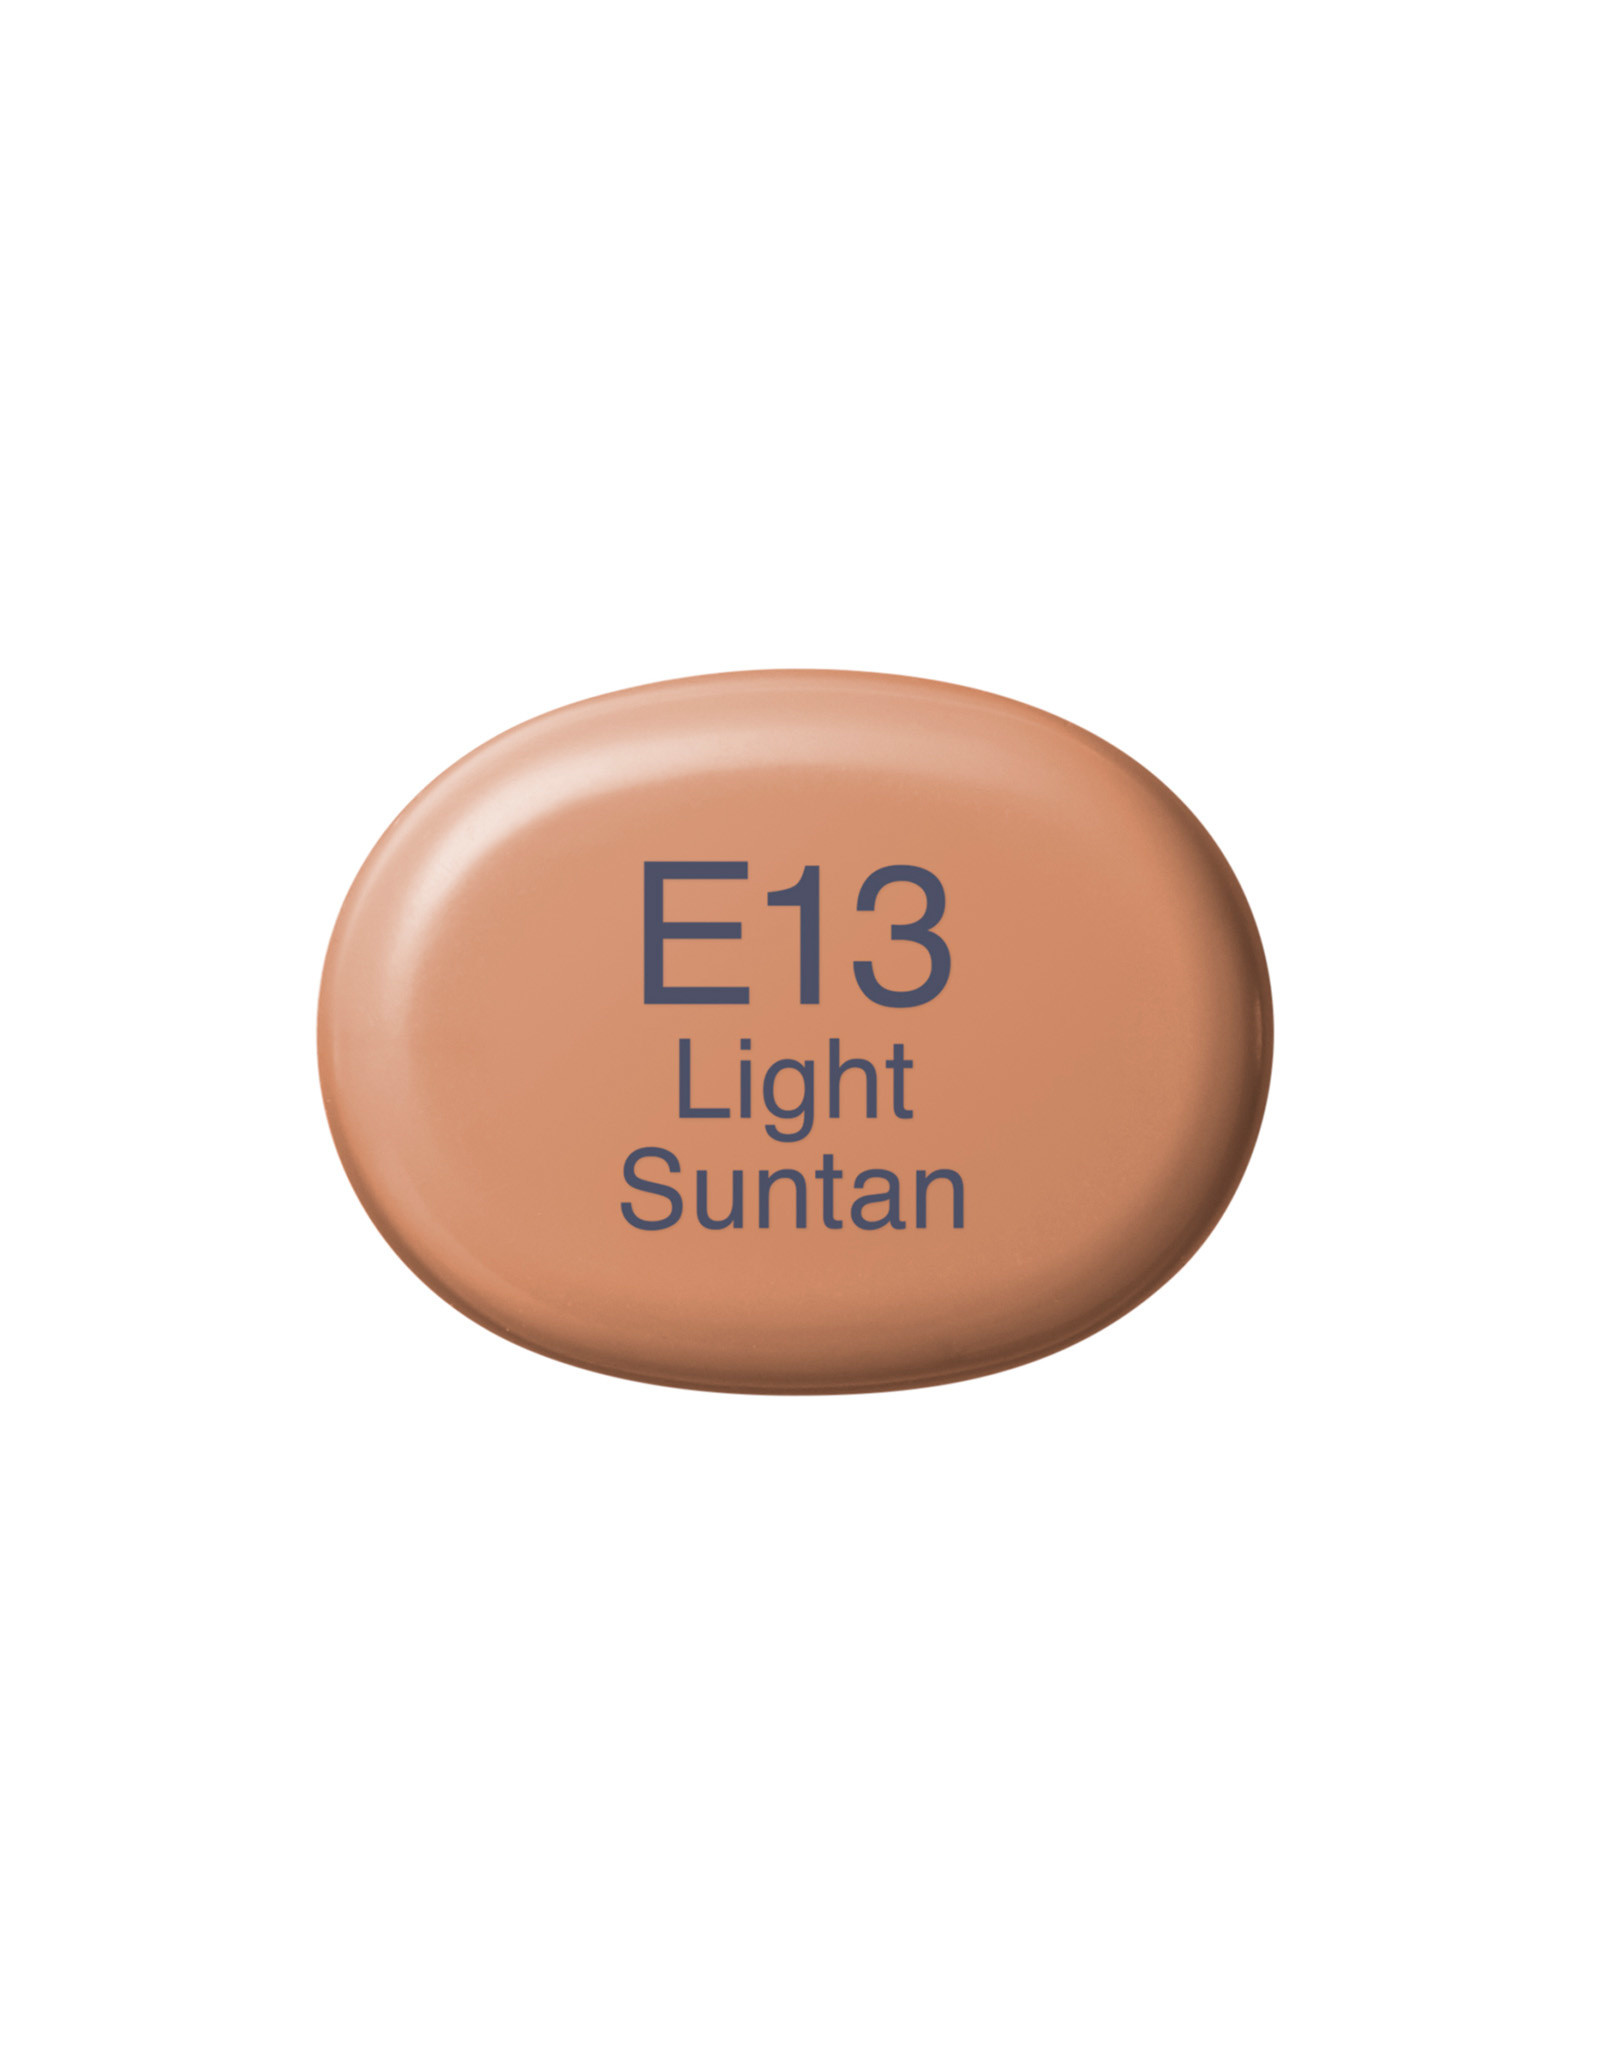 Copic Sketch Marker Light Suntan E13 Best Price